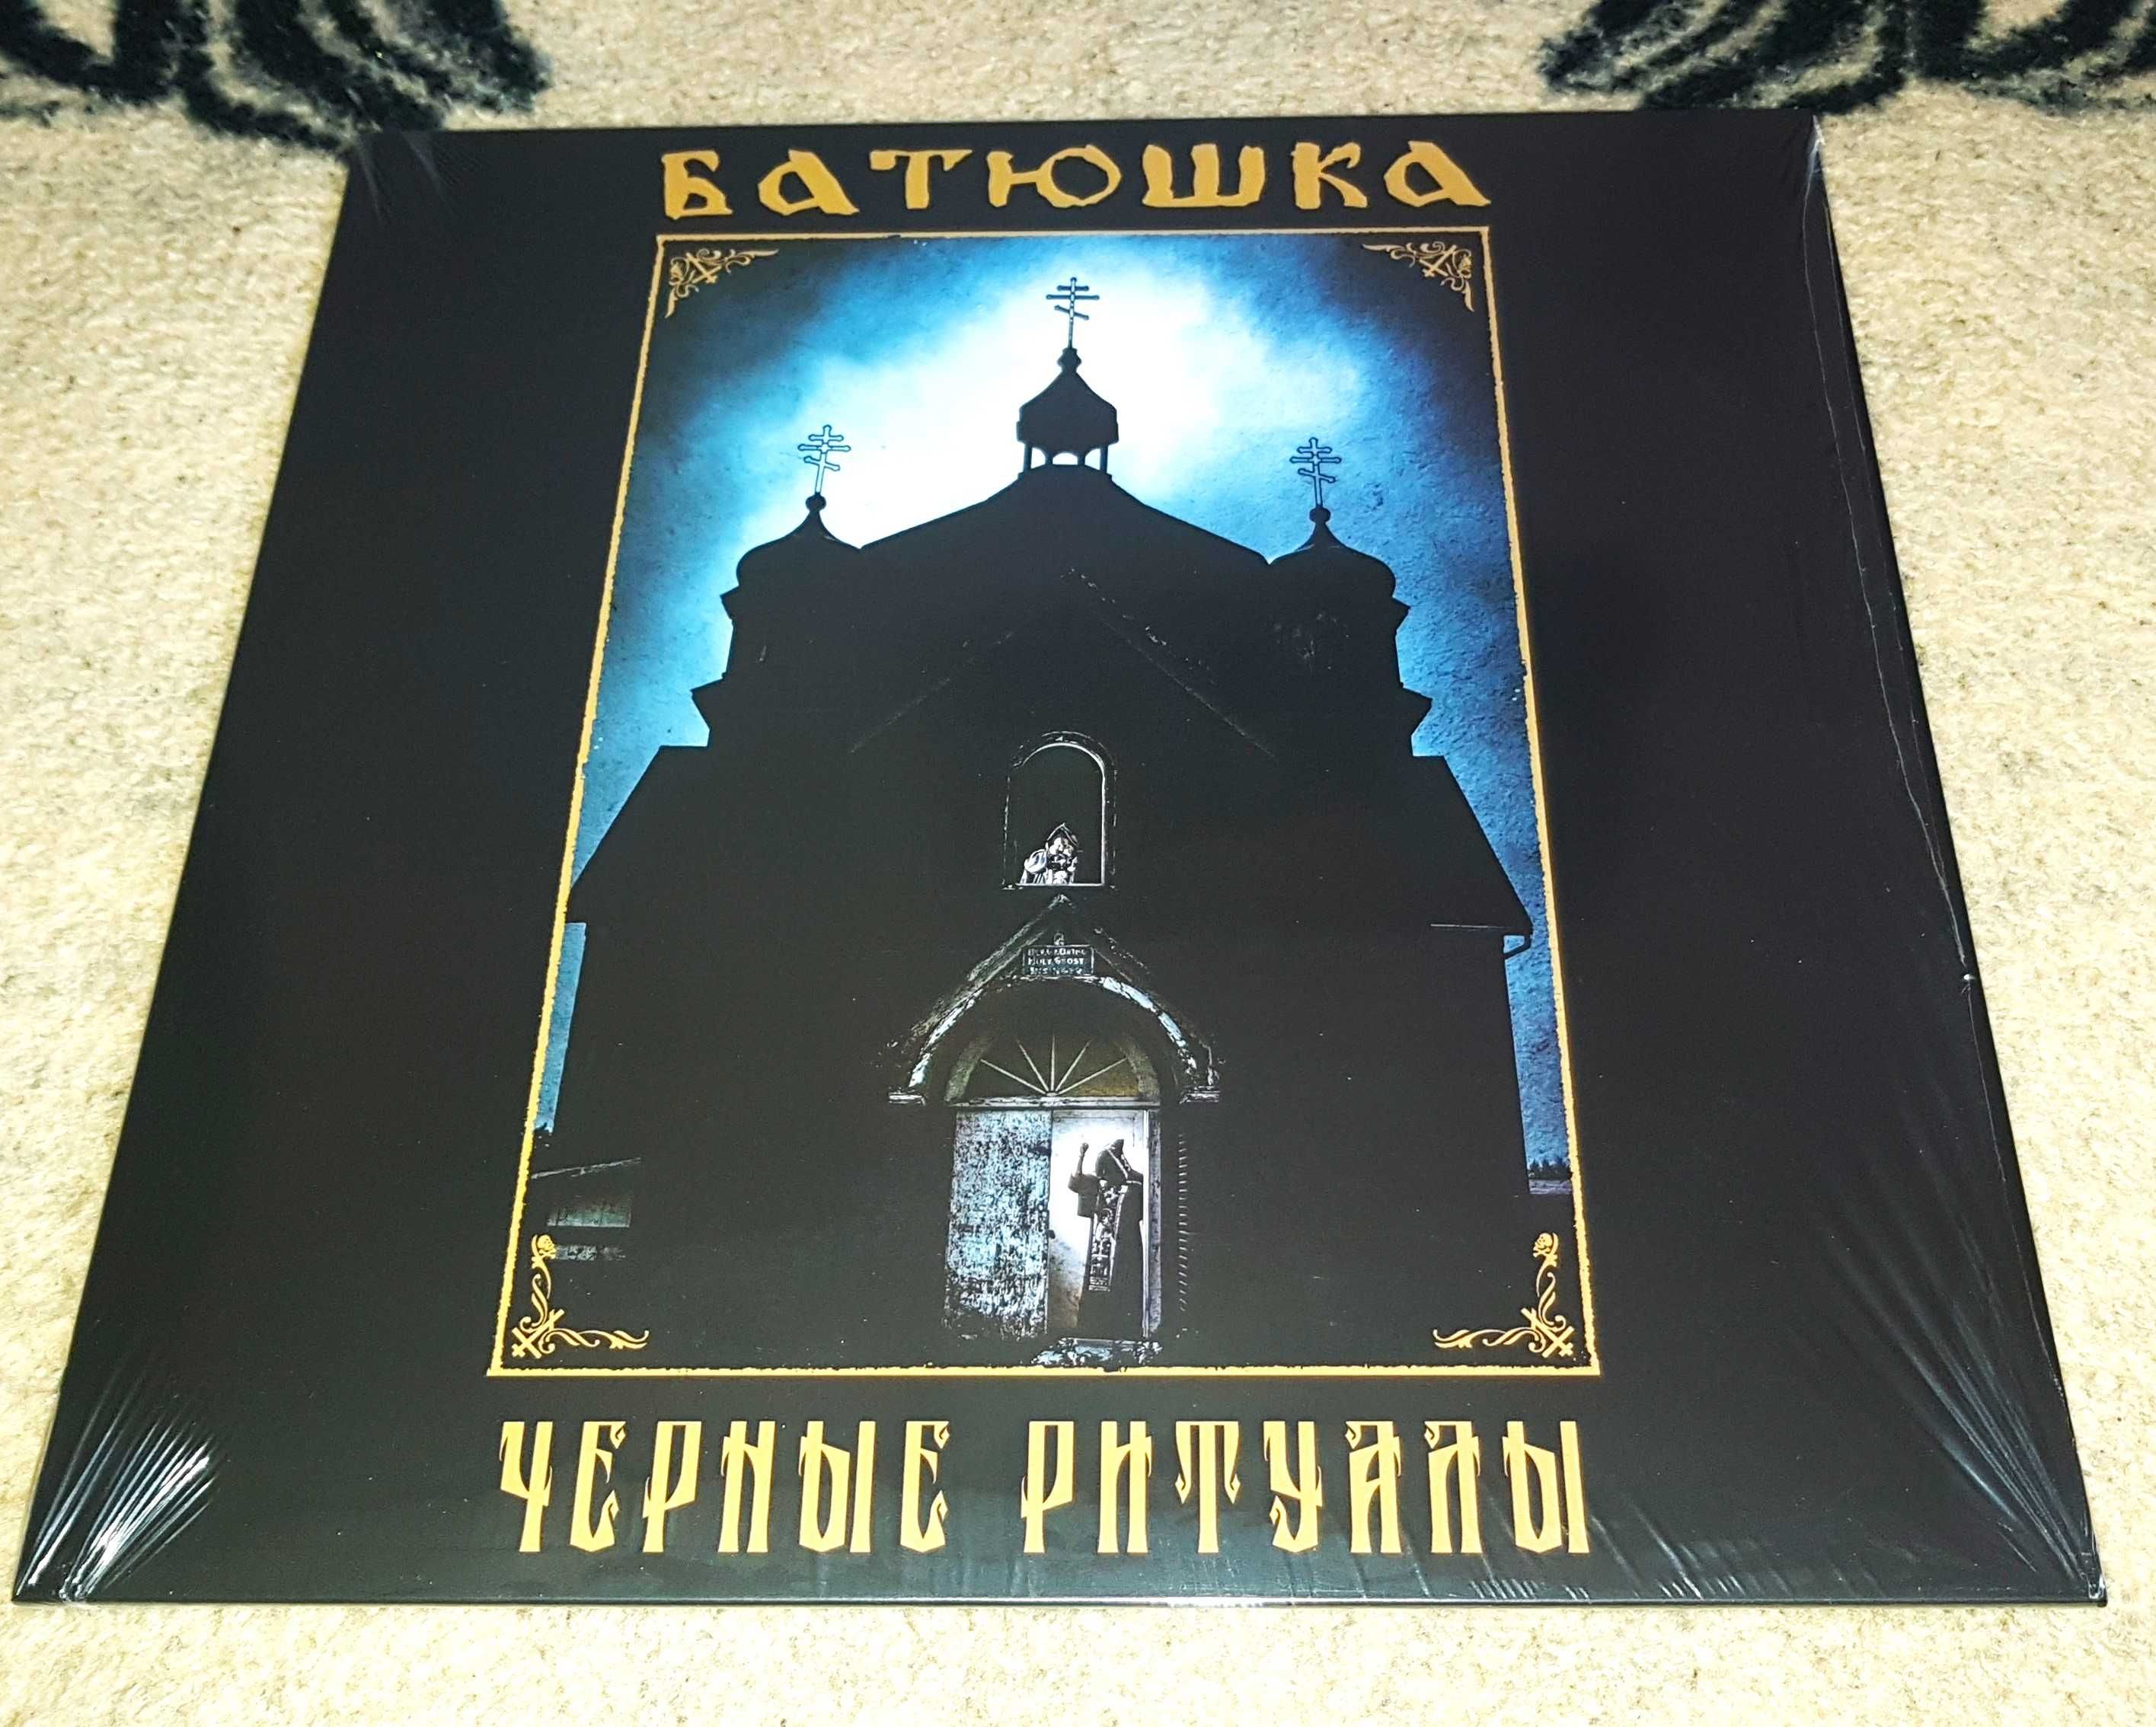 Batushka - "ЧЕРНЫЕ РИТУАЛЫ / Black Rituals" winyl